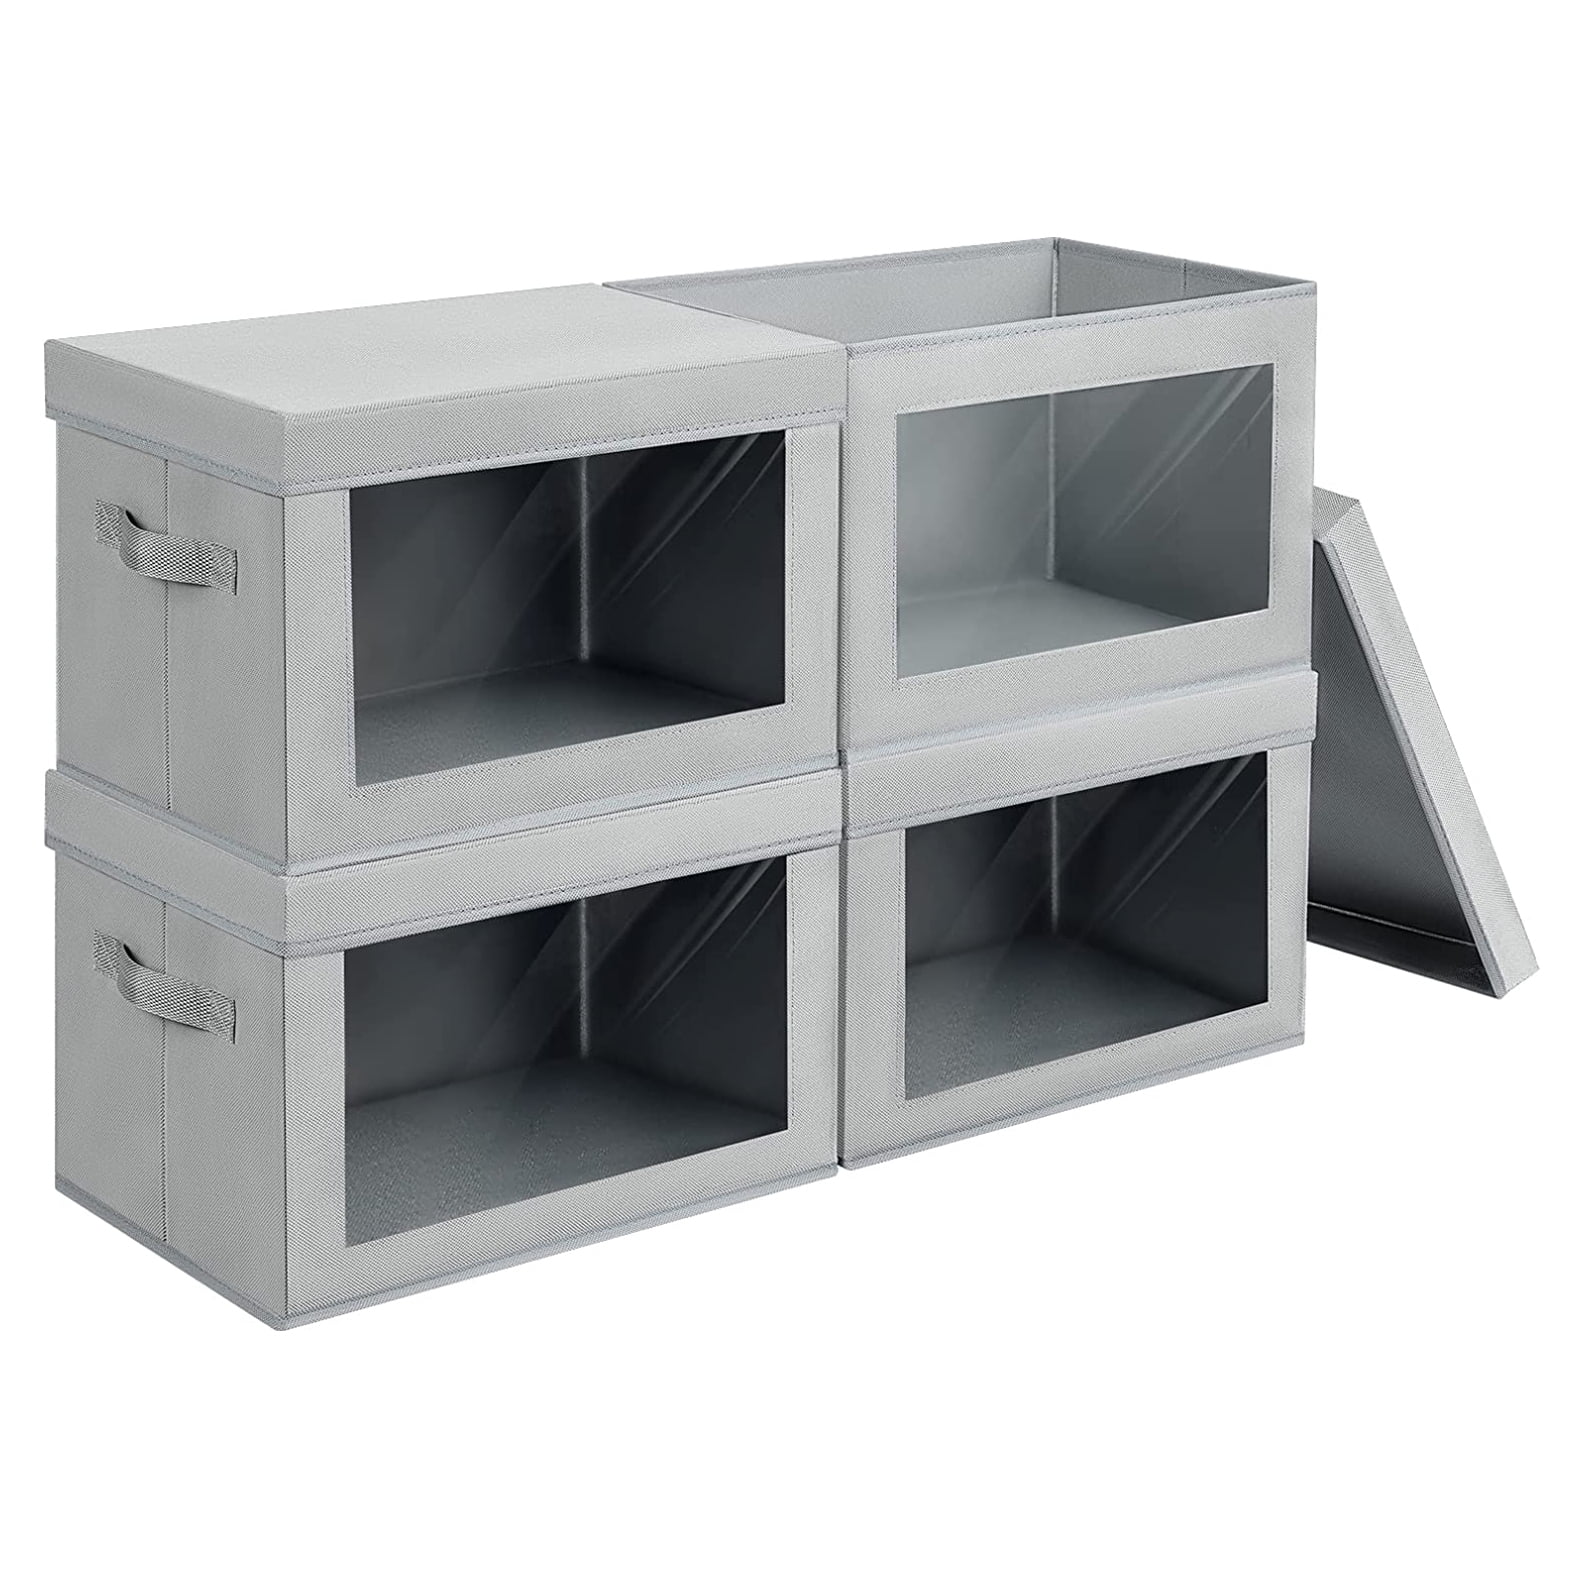   Basics Closet Storage Organizer with Fabric Bins and  Shelves, Grey, 32.7 x 12.2 x 31 : Home & Kitchen